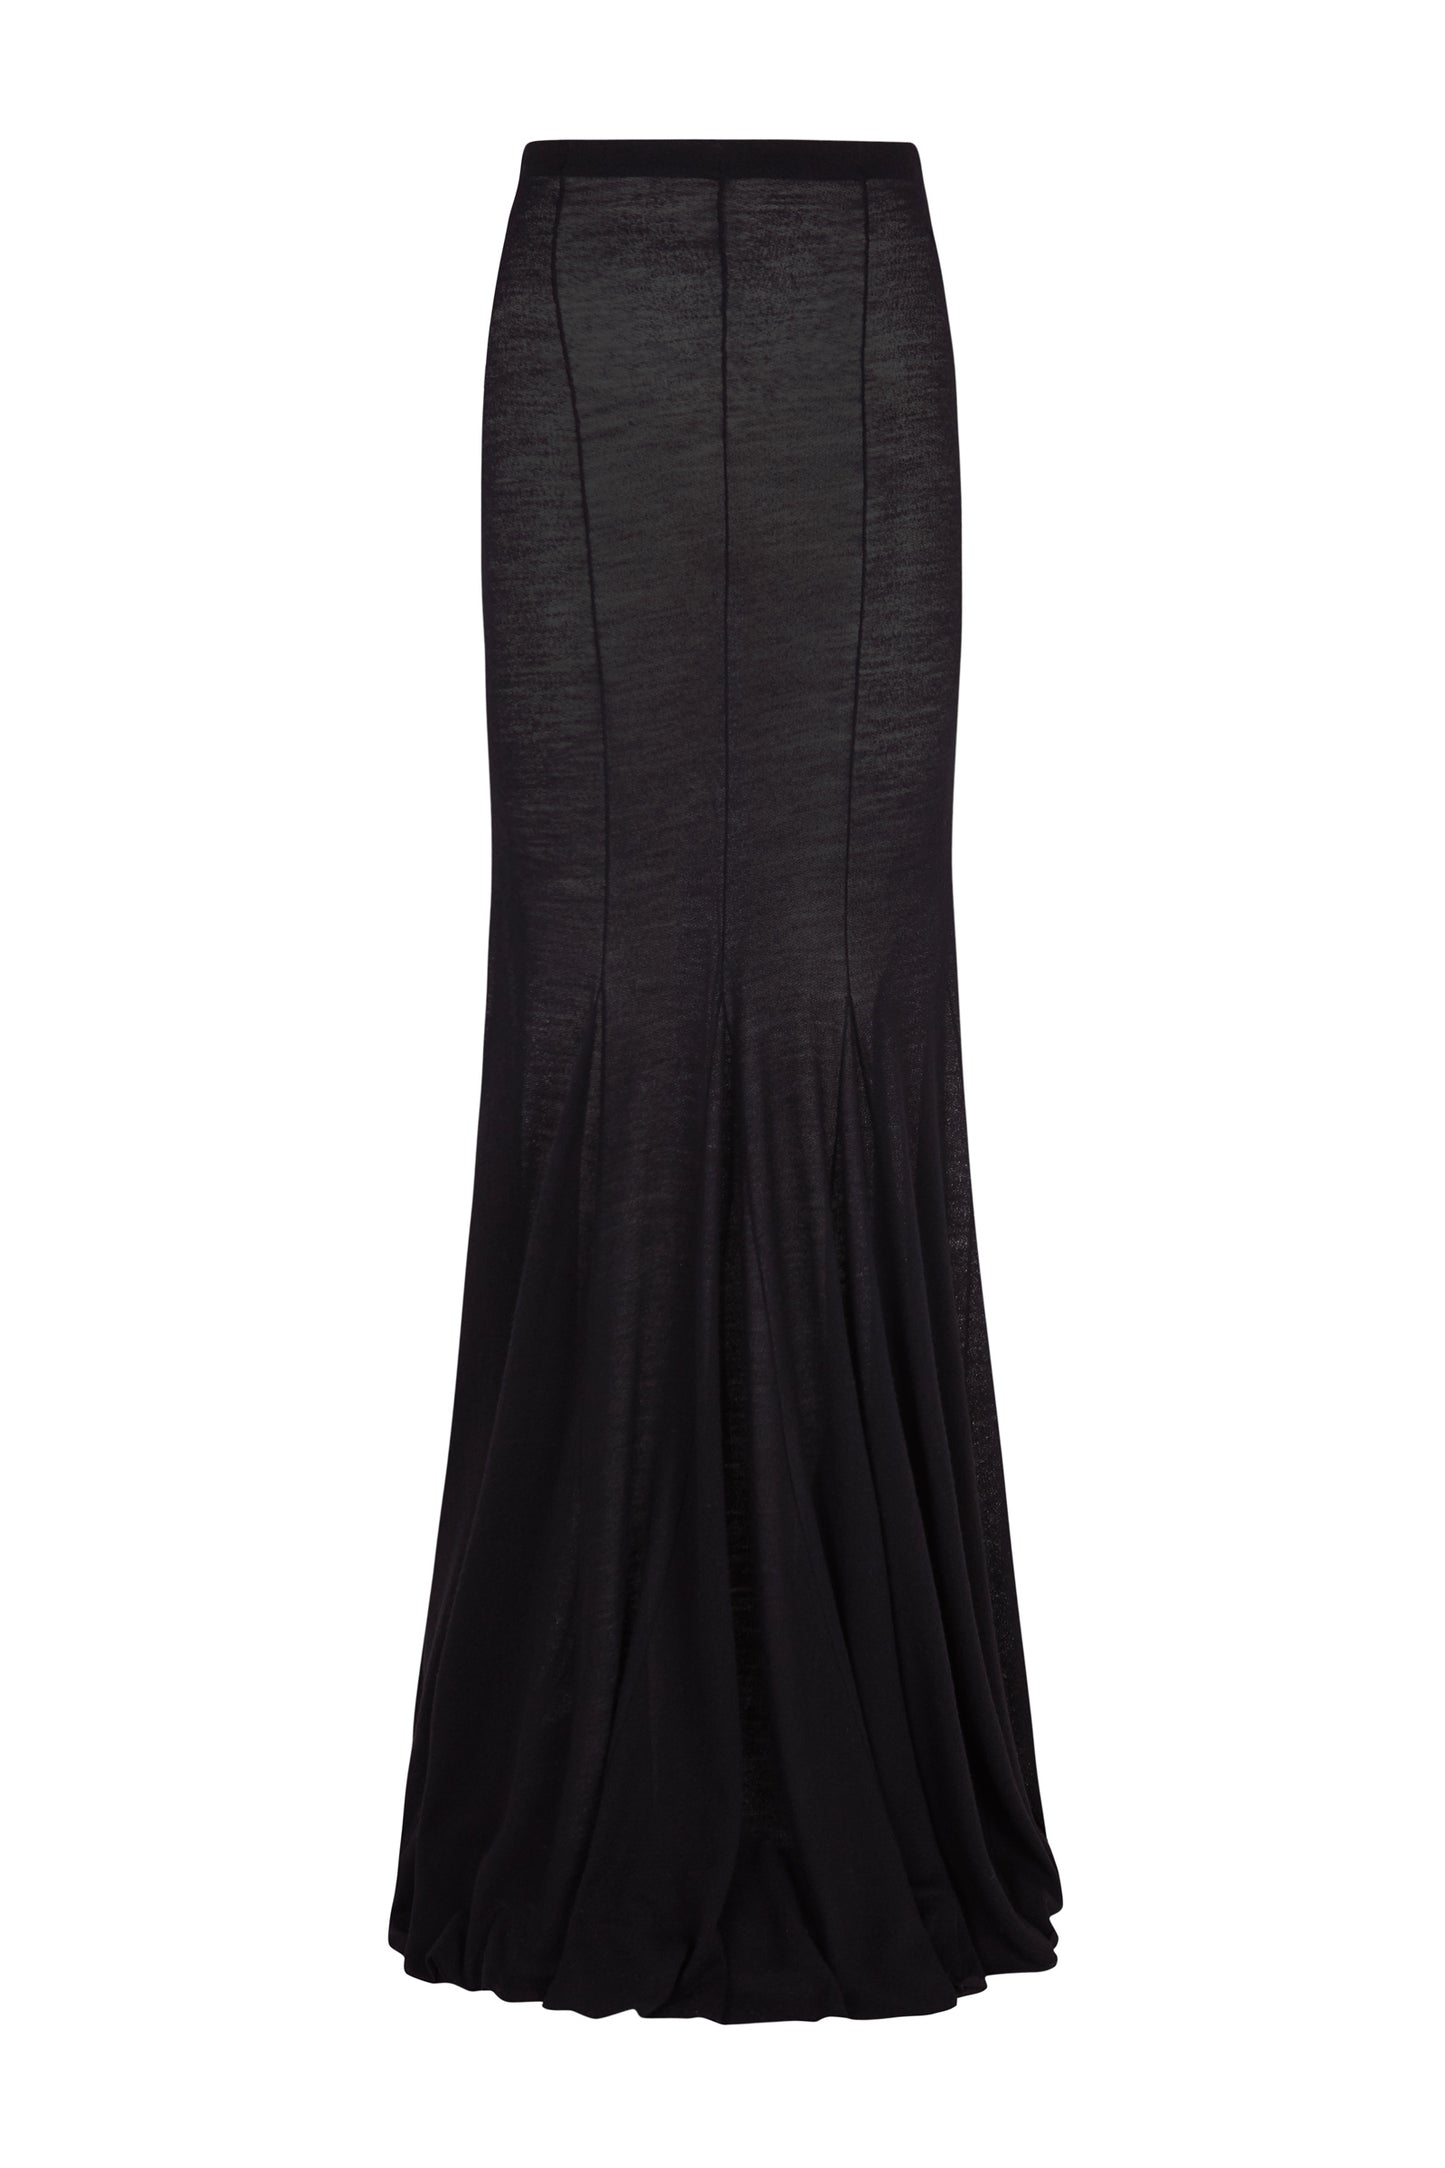 Cortana - Jenna, skirt in black virgin wool